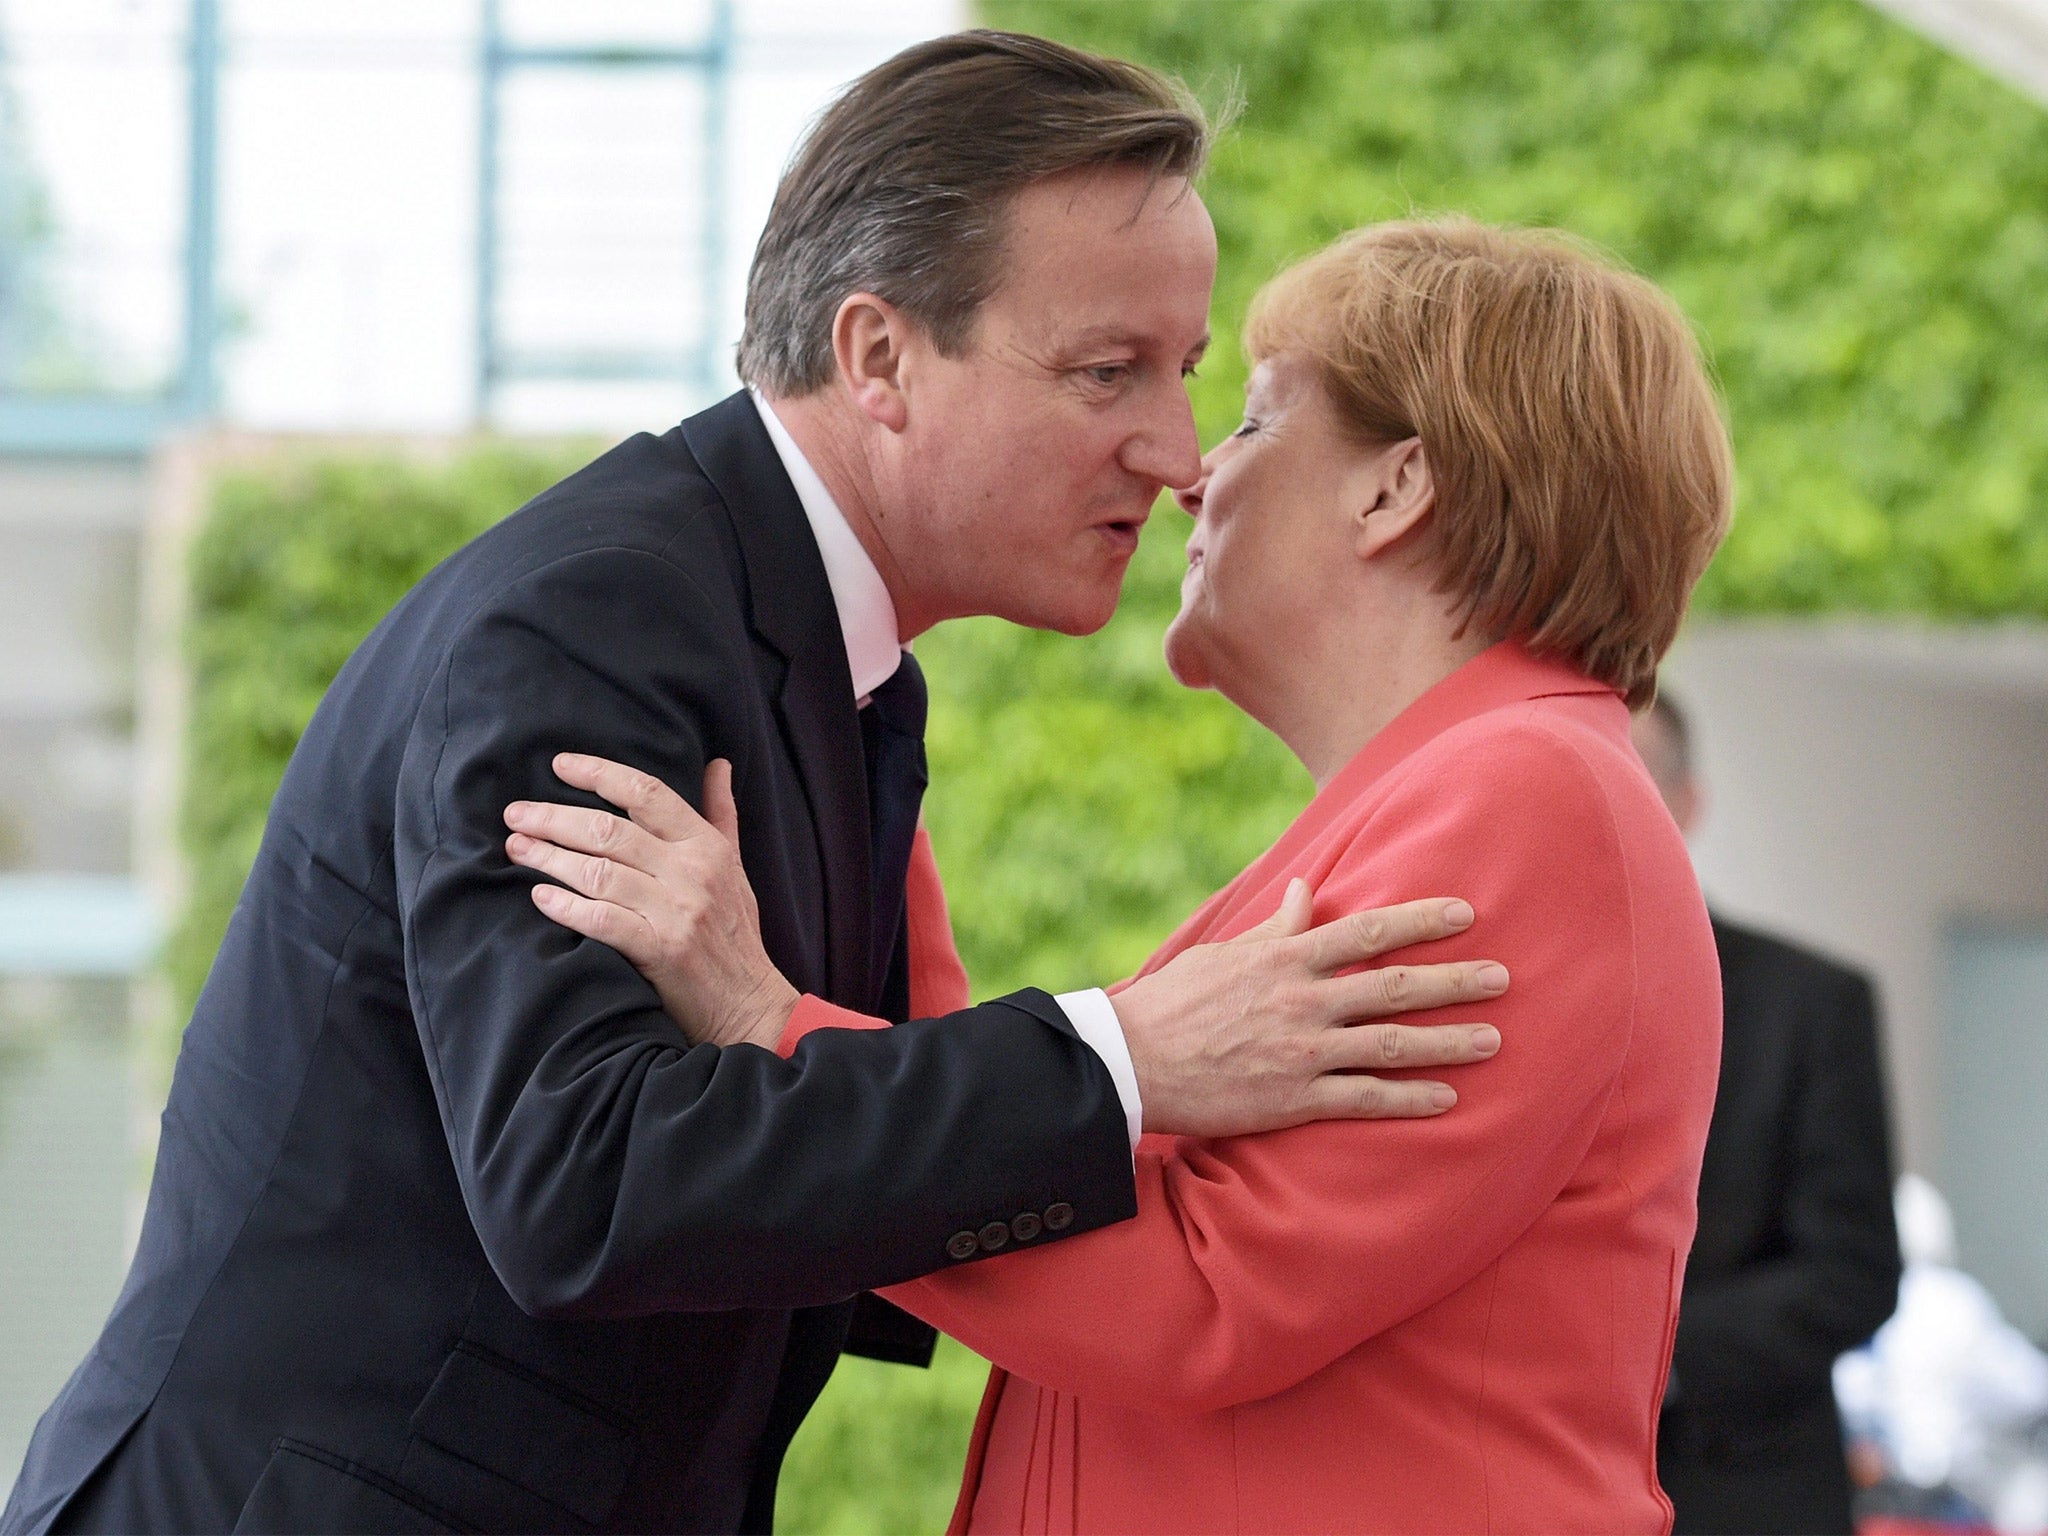 Angela Merkel welcomes David Cameron for bilateral talks in Berlin on Wednesday